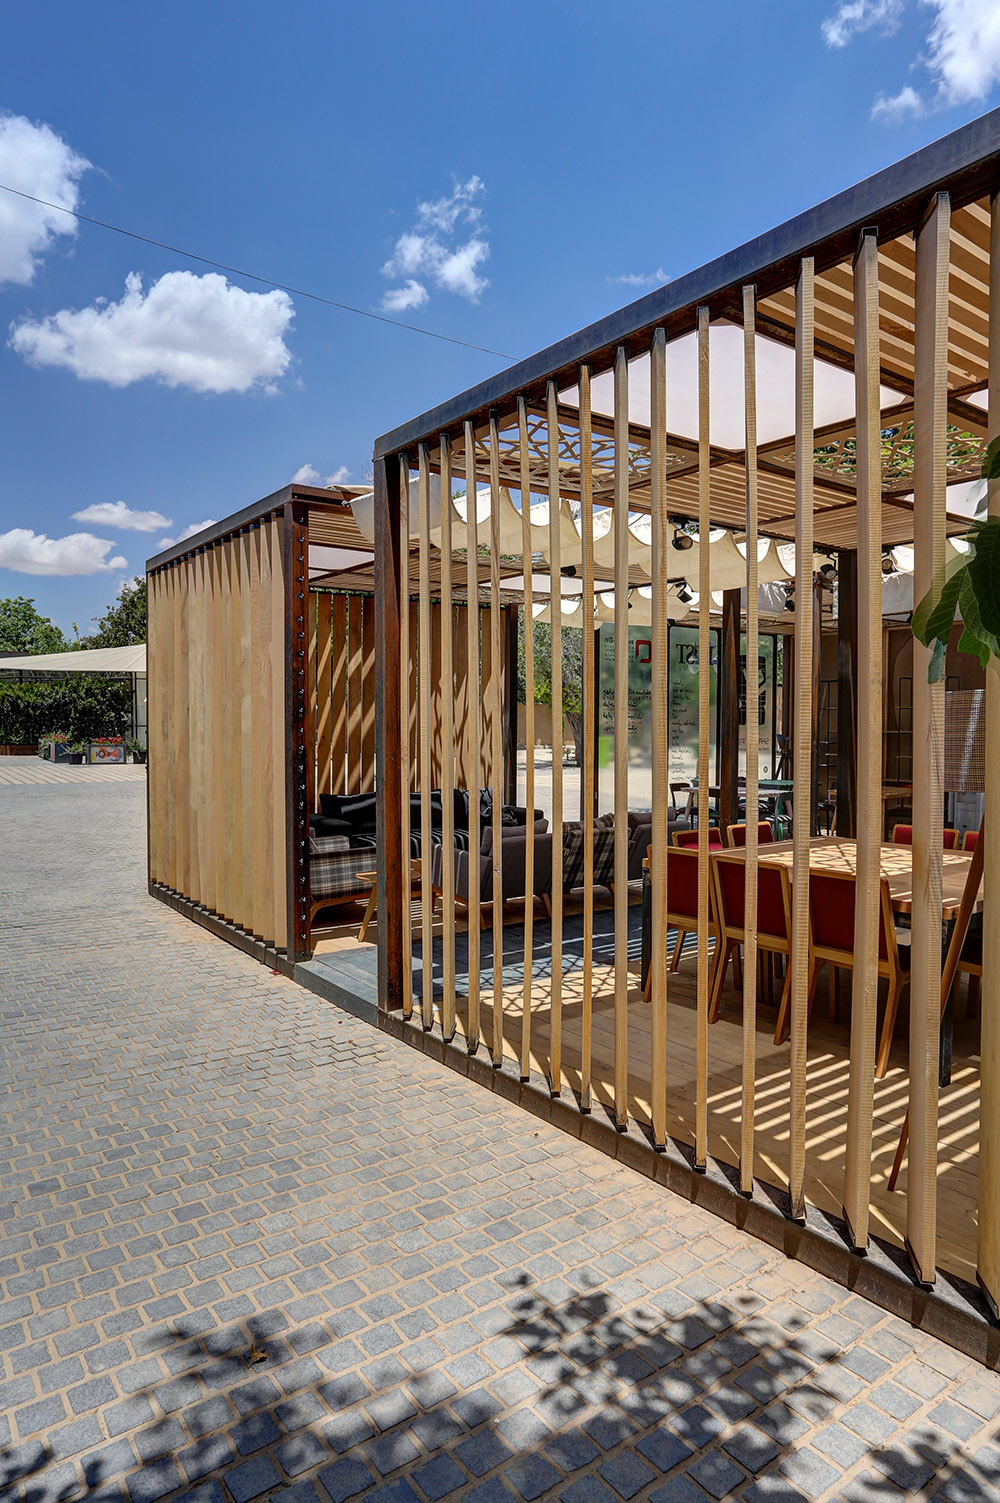 picture no. 5 ofGhavam al-din Pavilion project, designed by Ahmad Ghodsimanesh & Partners